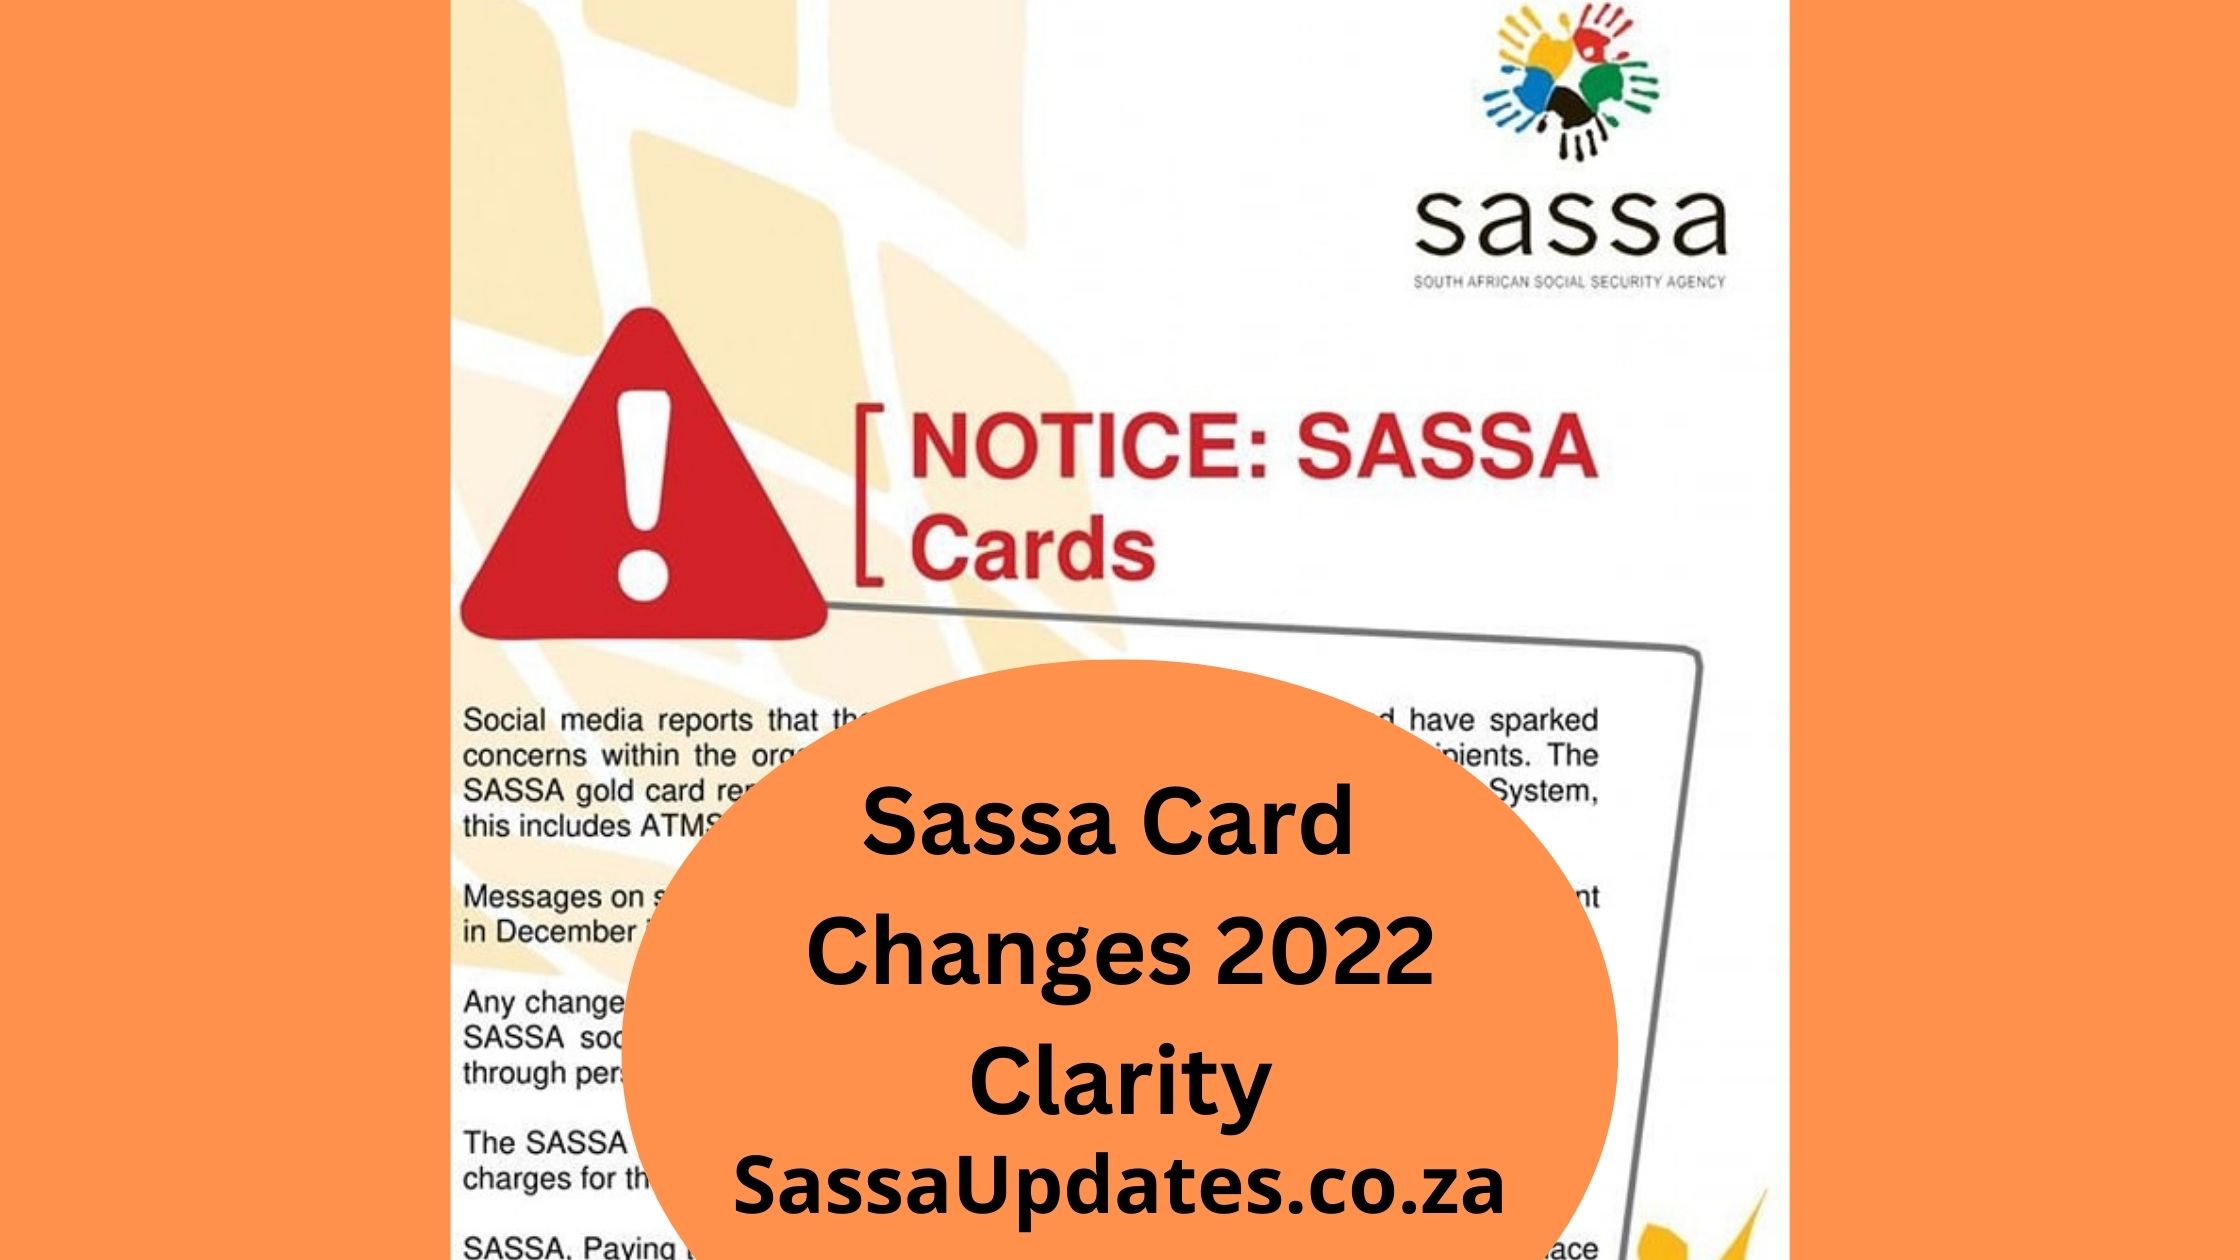 Sassa Card Changes 2022 Clarity